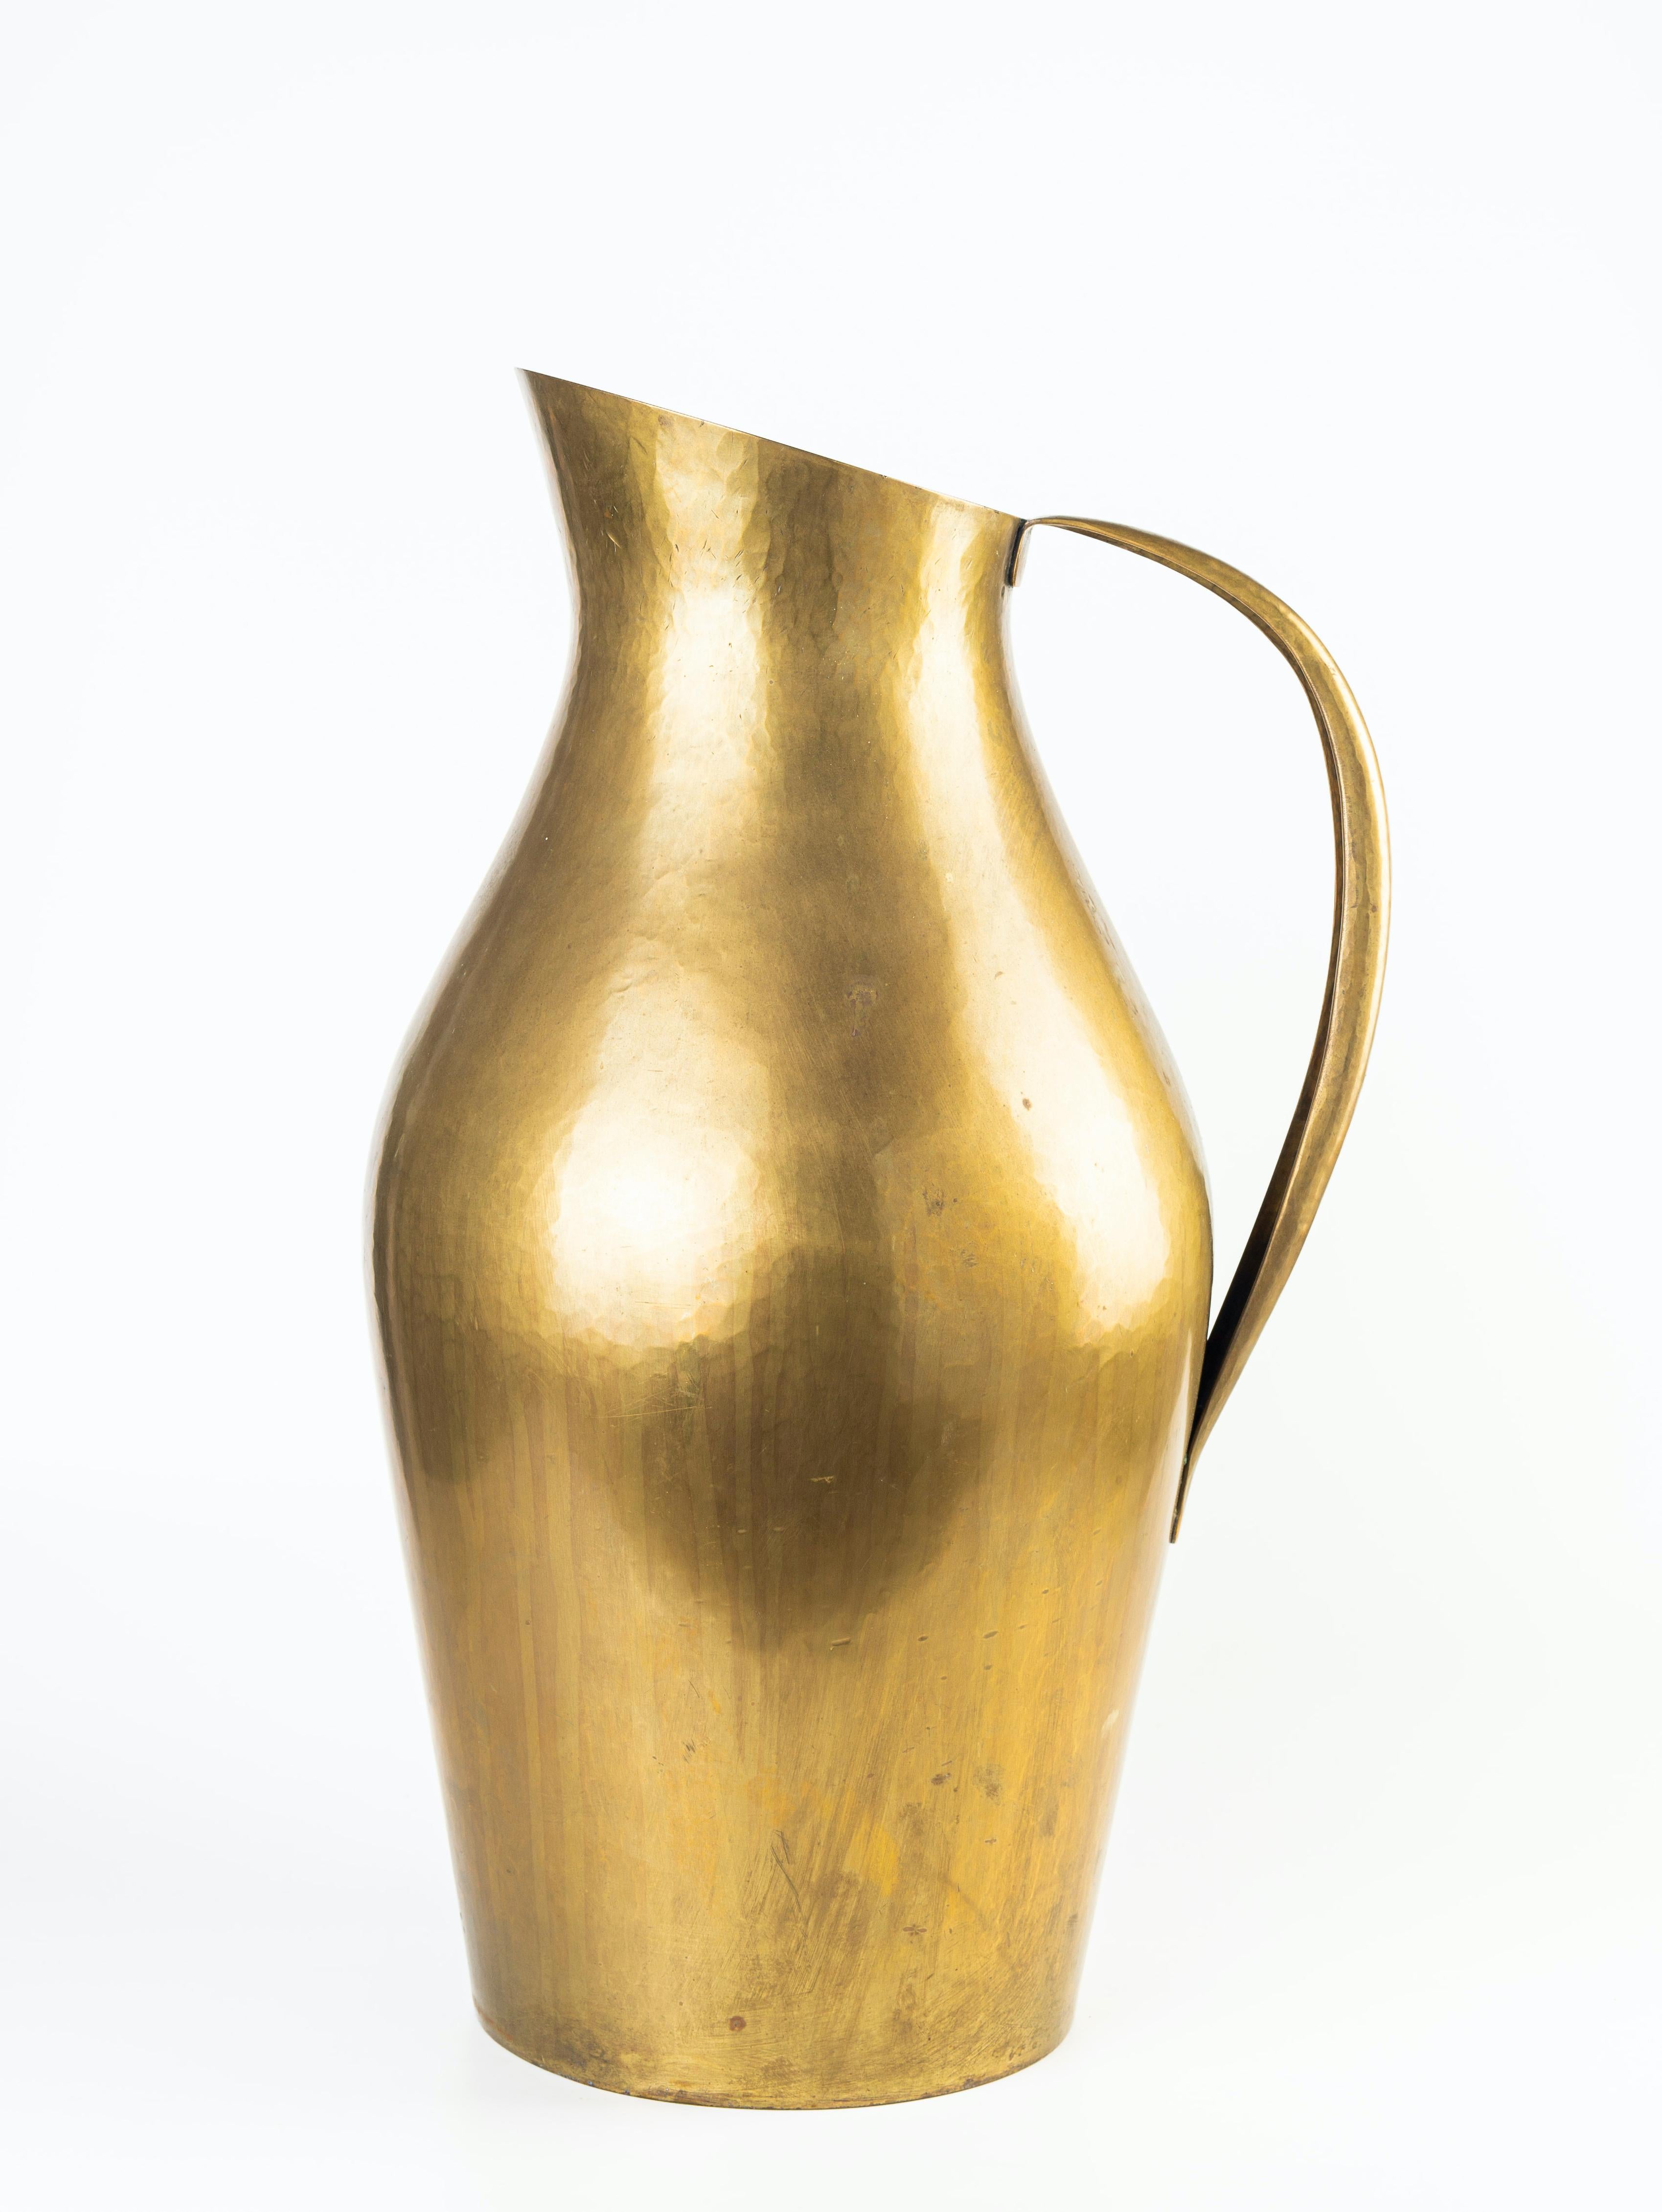 Bauhaus Vintage Large Brass Pitcher/Vase with Handles by Hayno Focken, Germany, 1930s